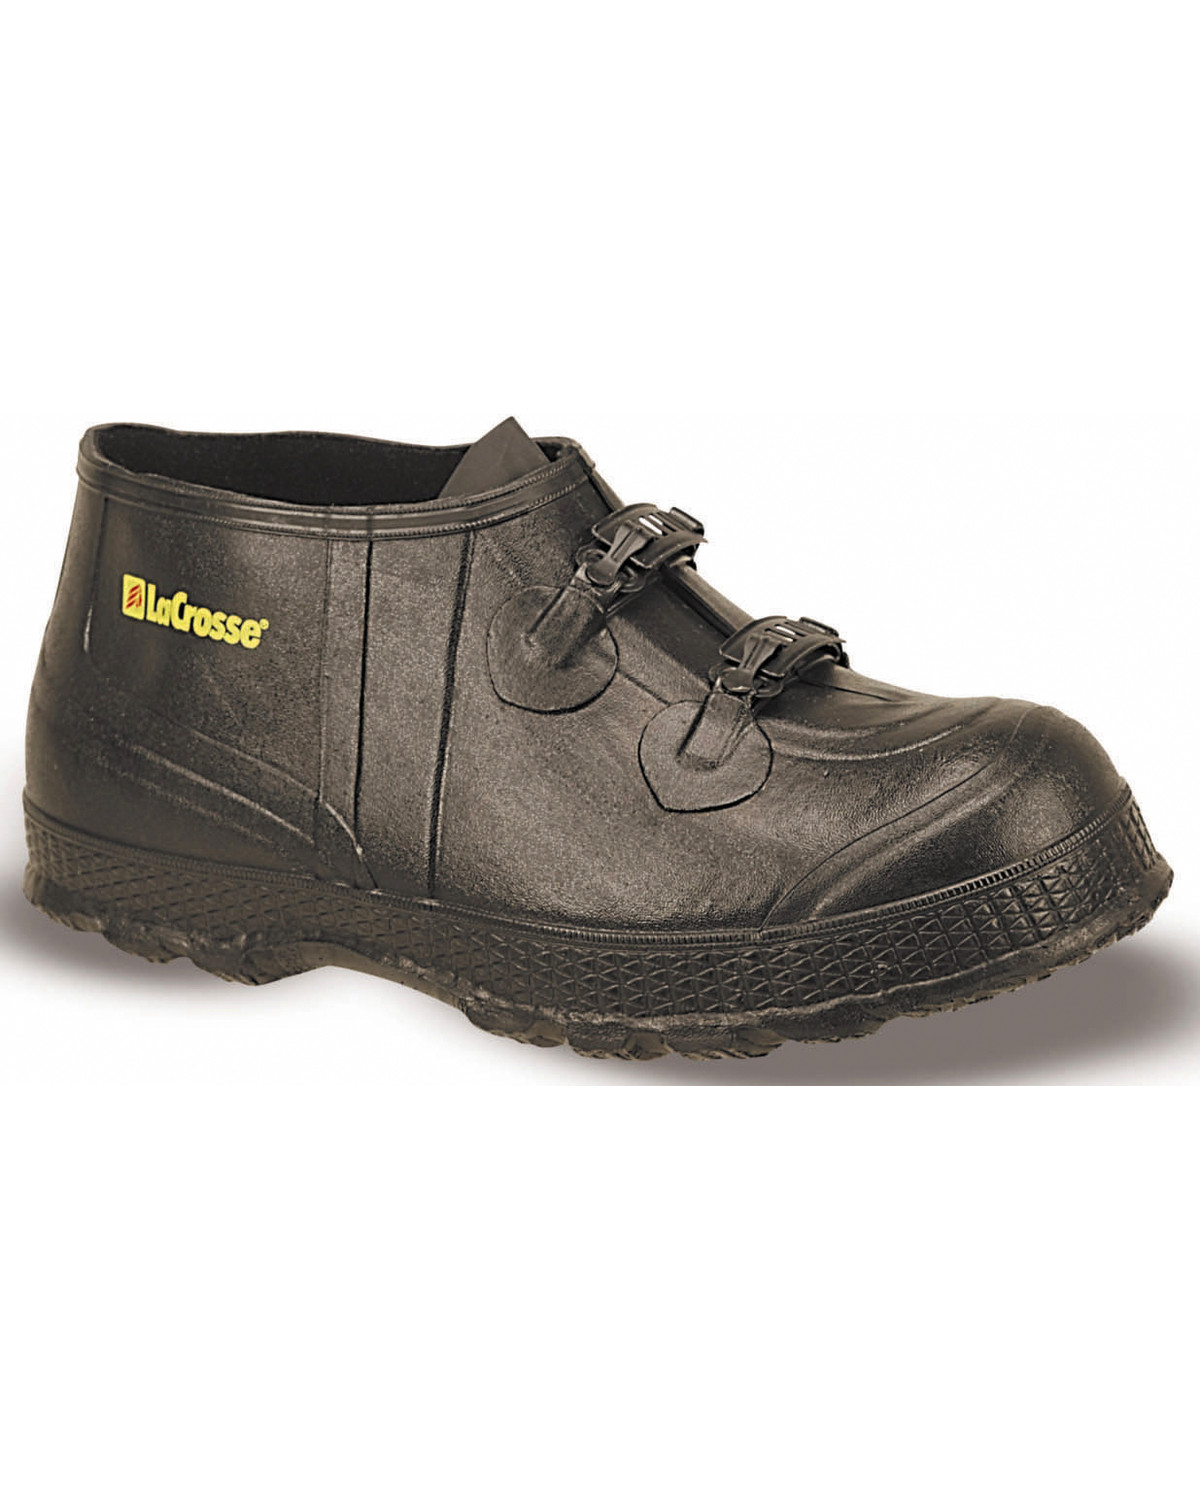 LaCrosse Men's Z-Series Overshoe 5" Work Shoes